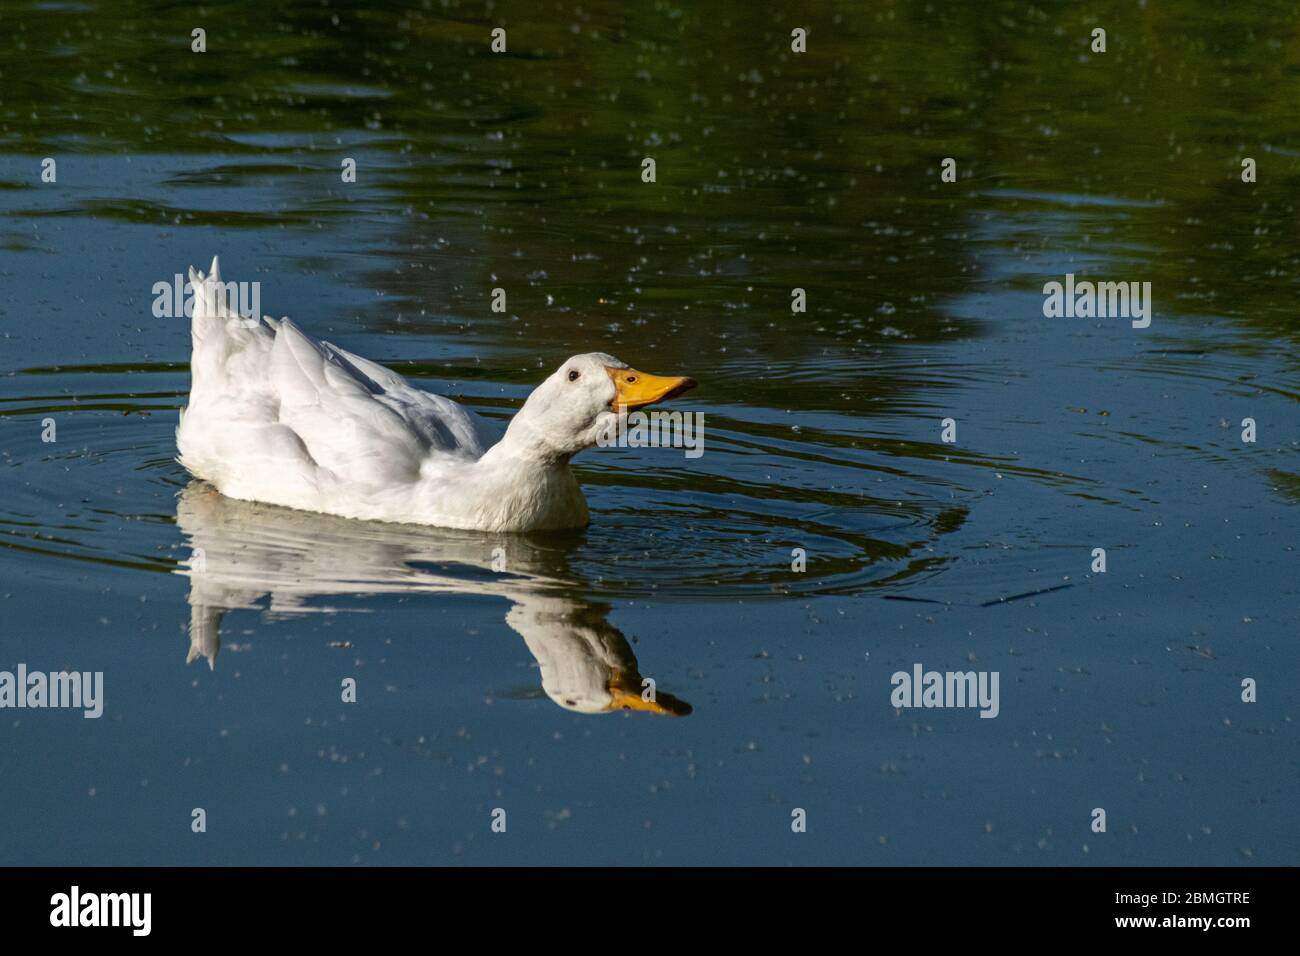 White pekin duck swimming on a lake with reflection Stock Photo